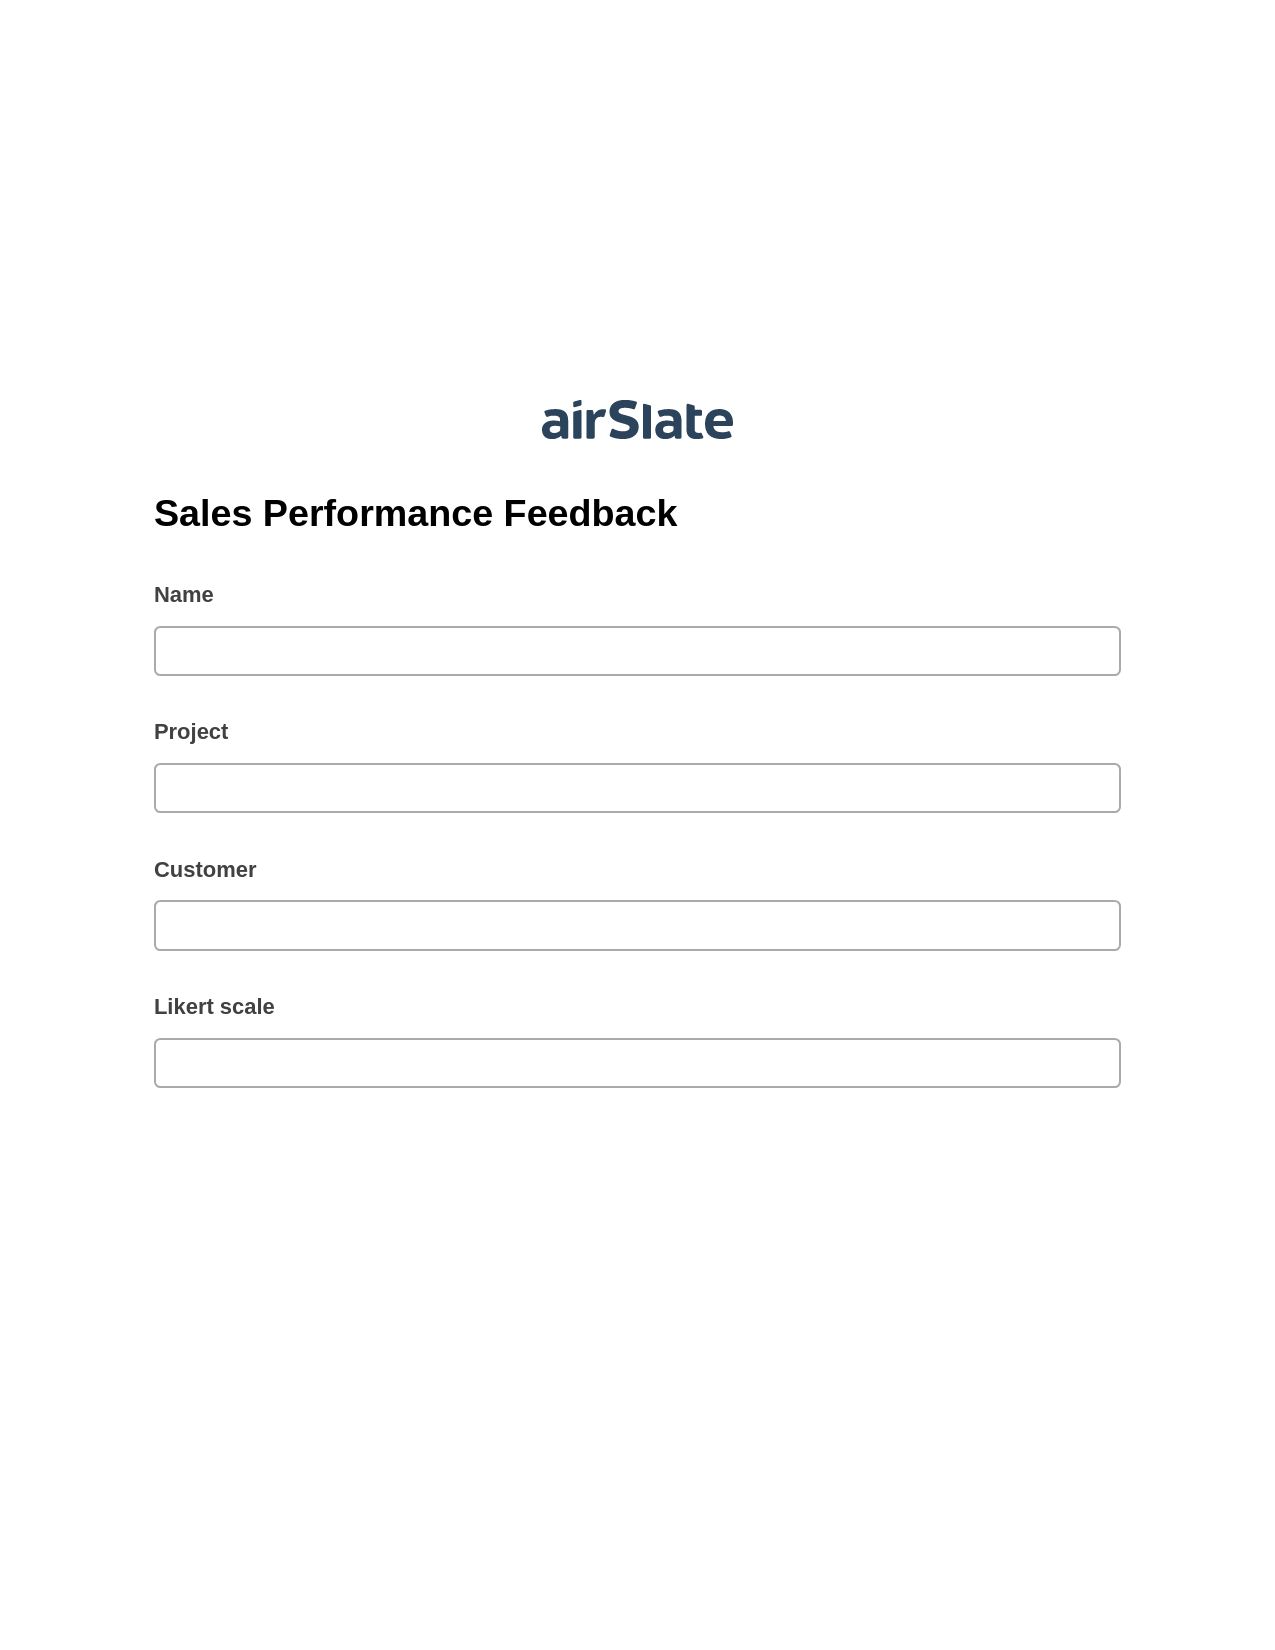 Sales Performance Feedback Pre-fill Slate from MS Dynamics 365 Records Bot, Audit Trail Bot, Slack Notification Postfinish Bot